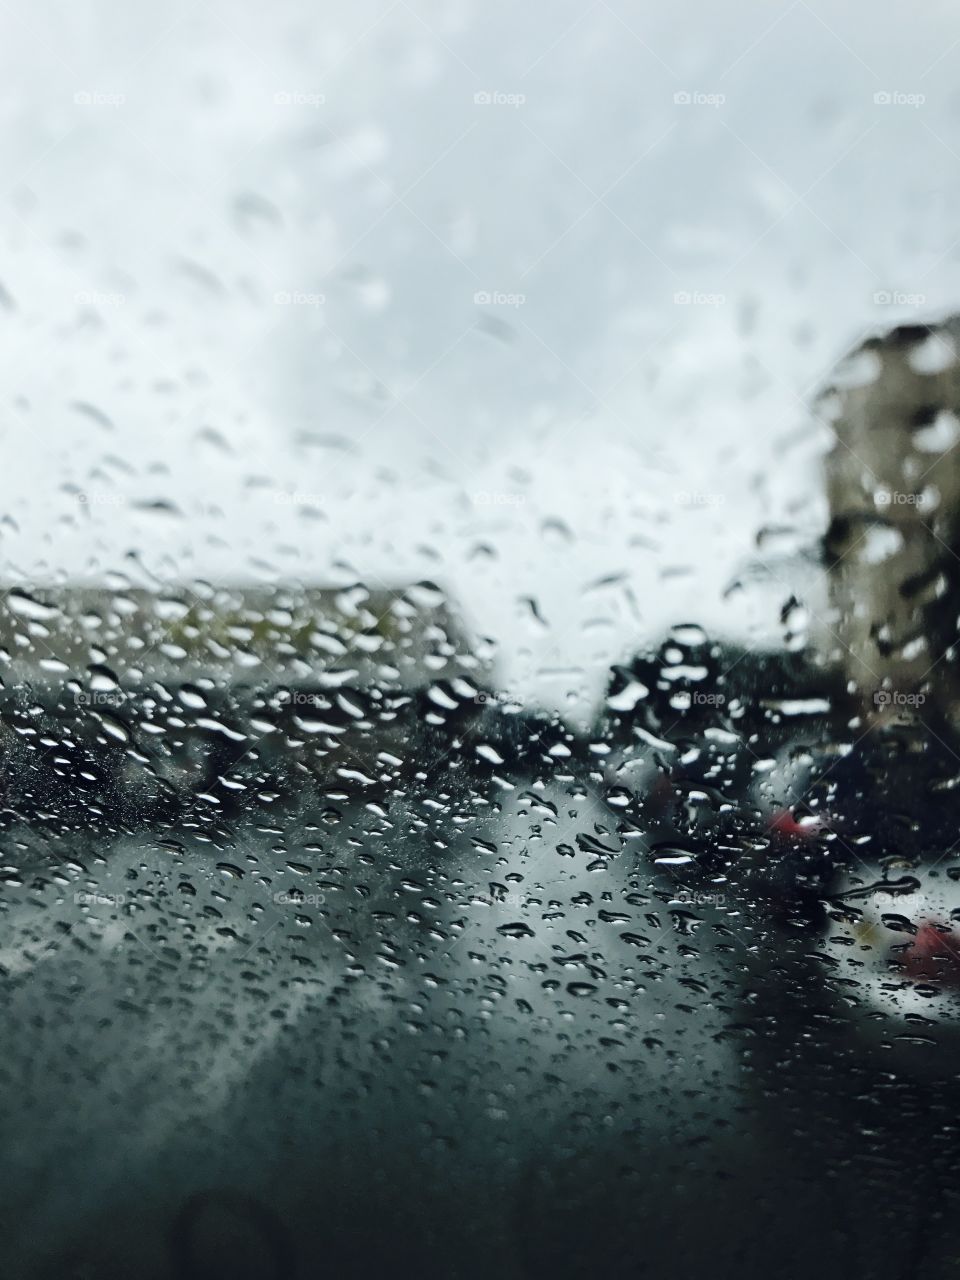 Rain/drops-glass